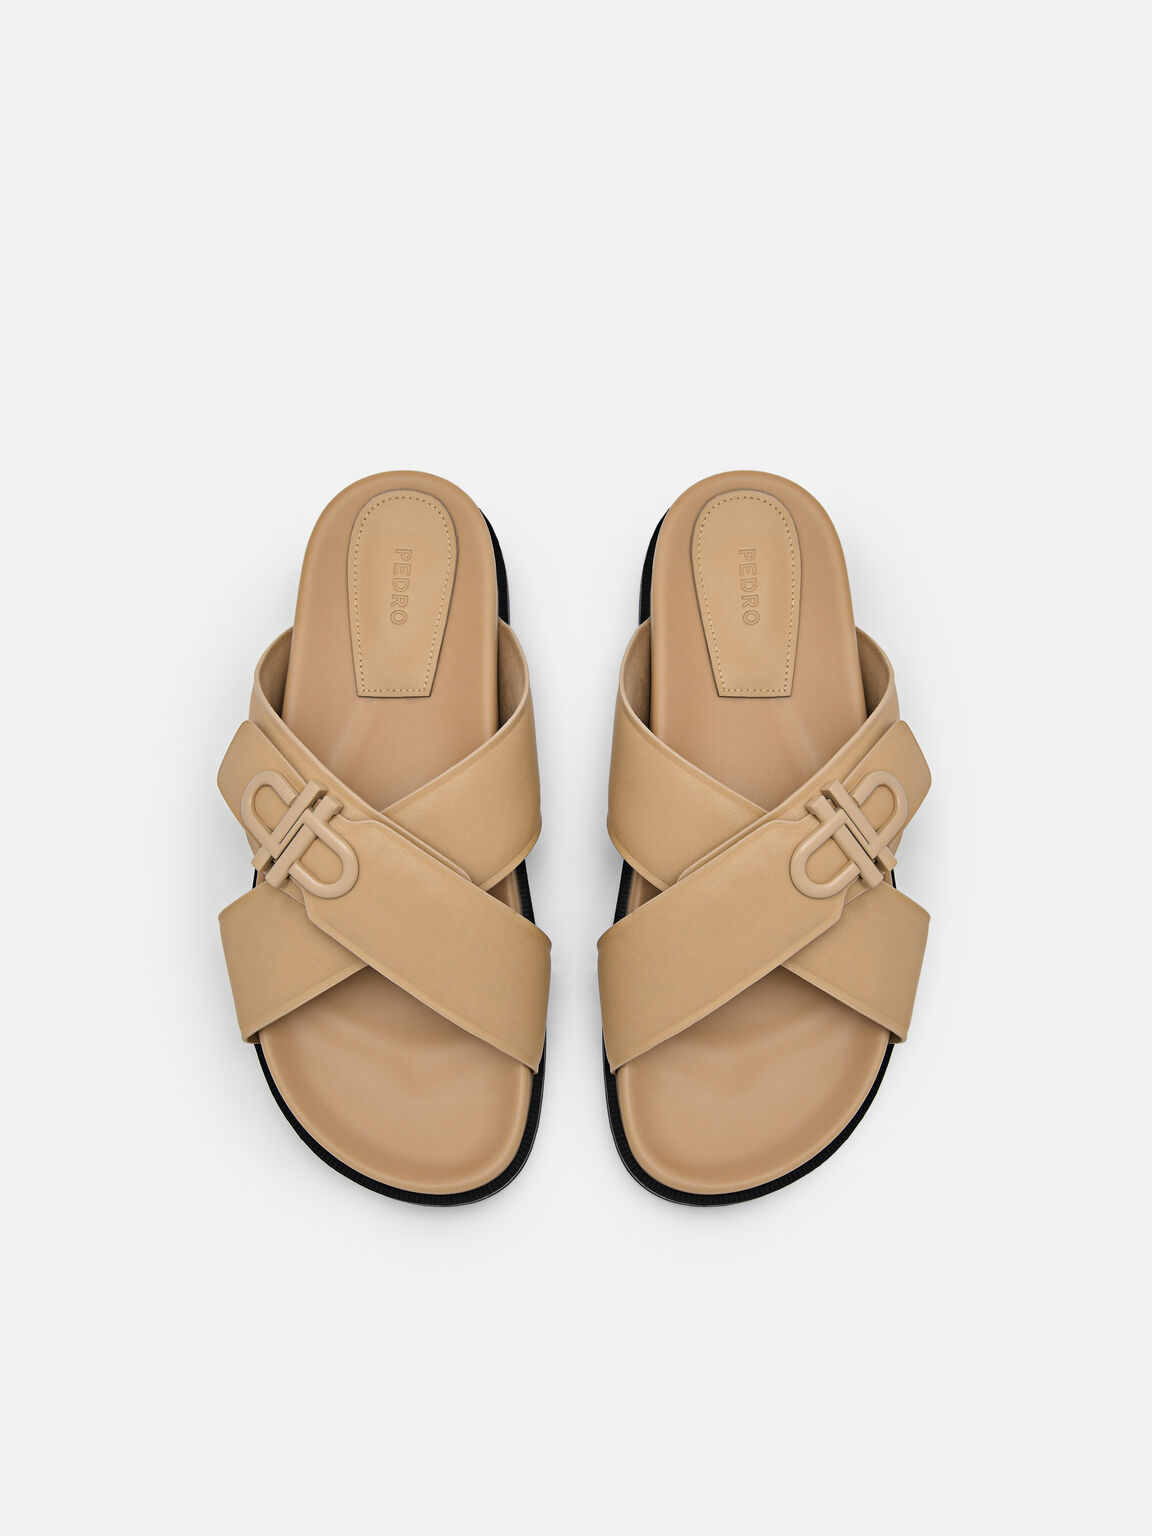 PEDRO Icon Cross Sandals, Nude, hi-res